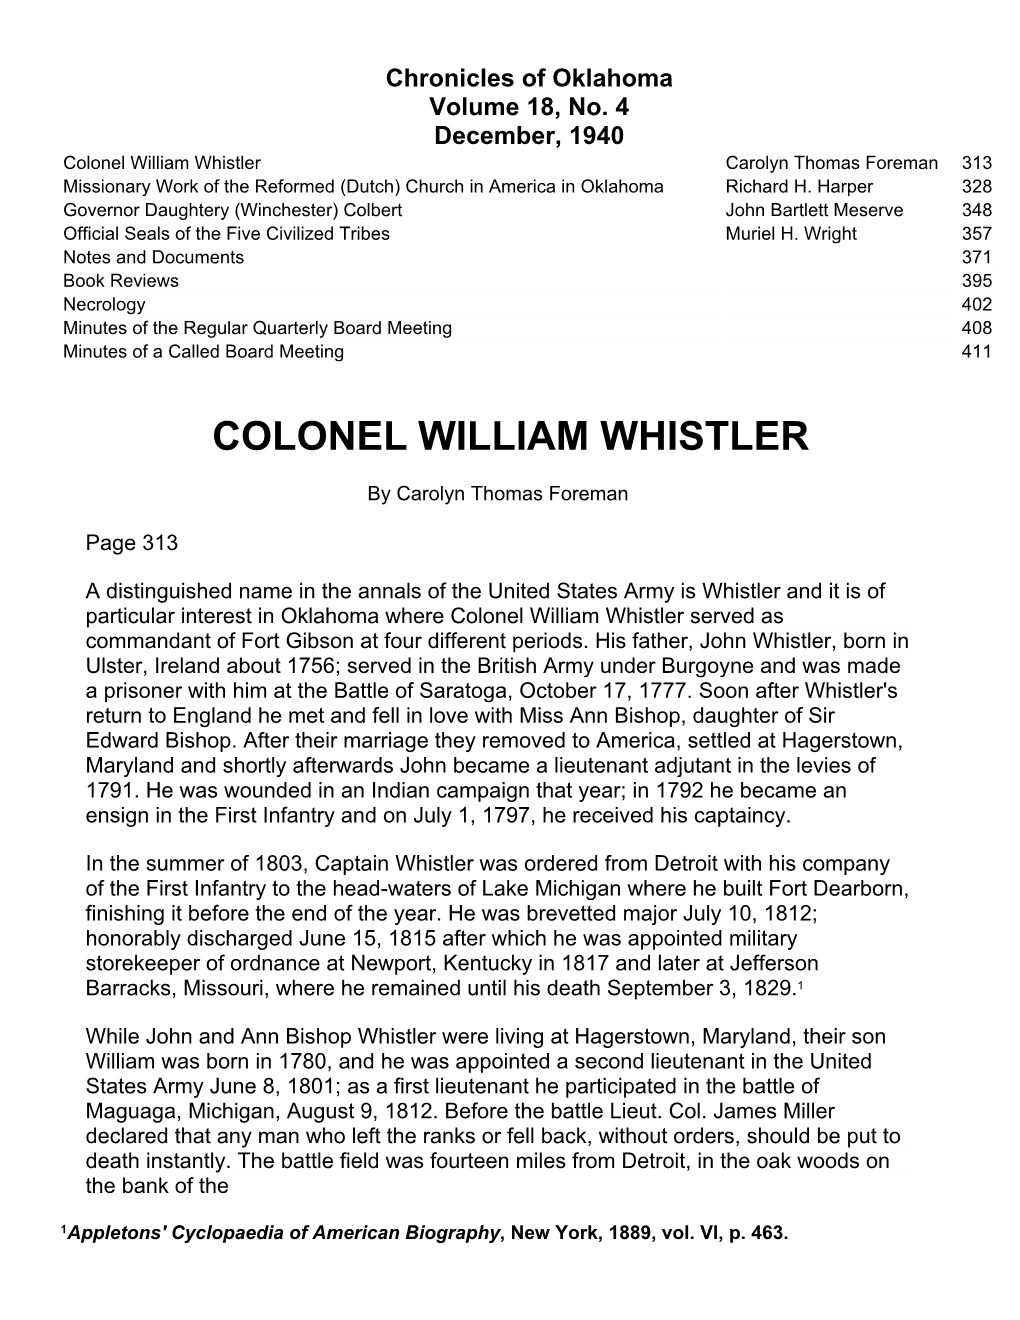 Colonel William Whistler Carolyn Thomas Foreman 313